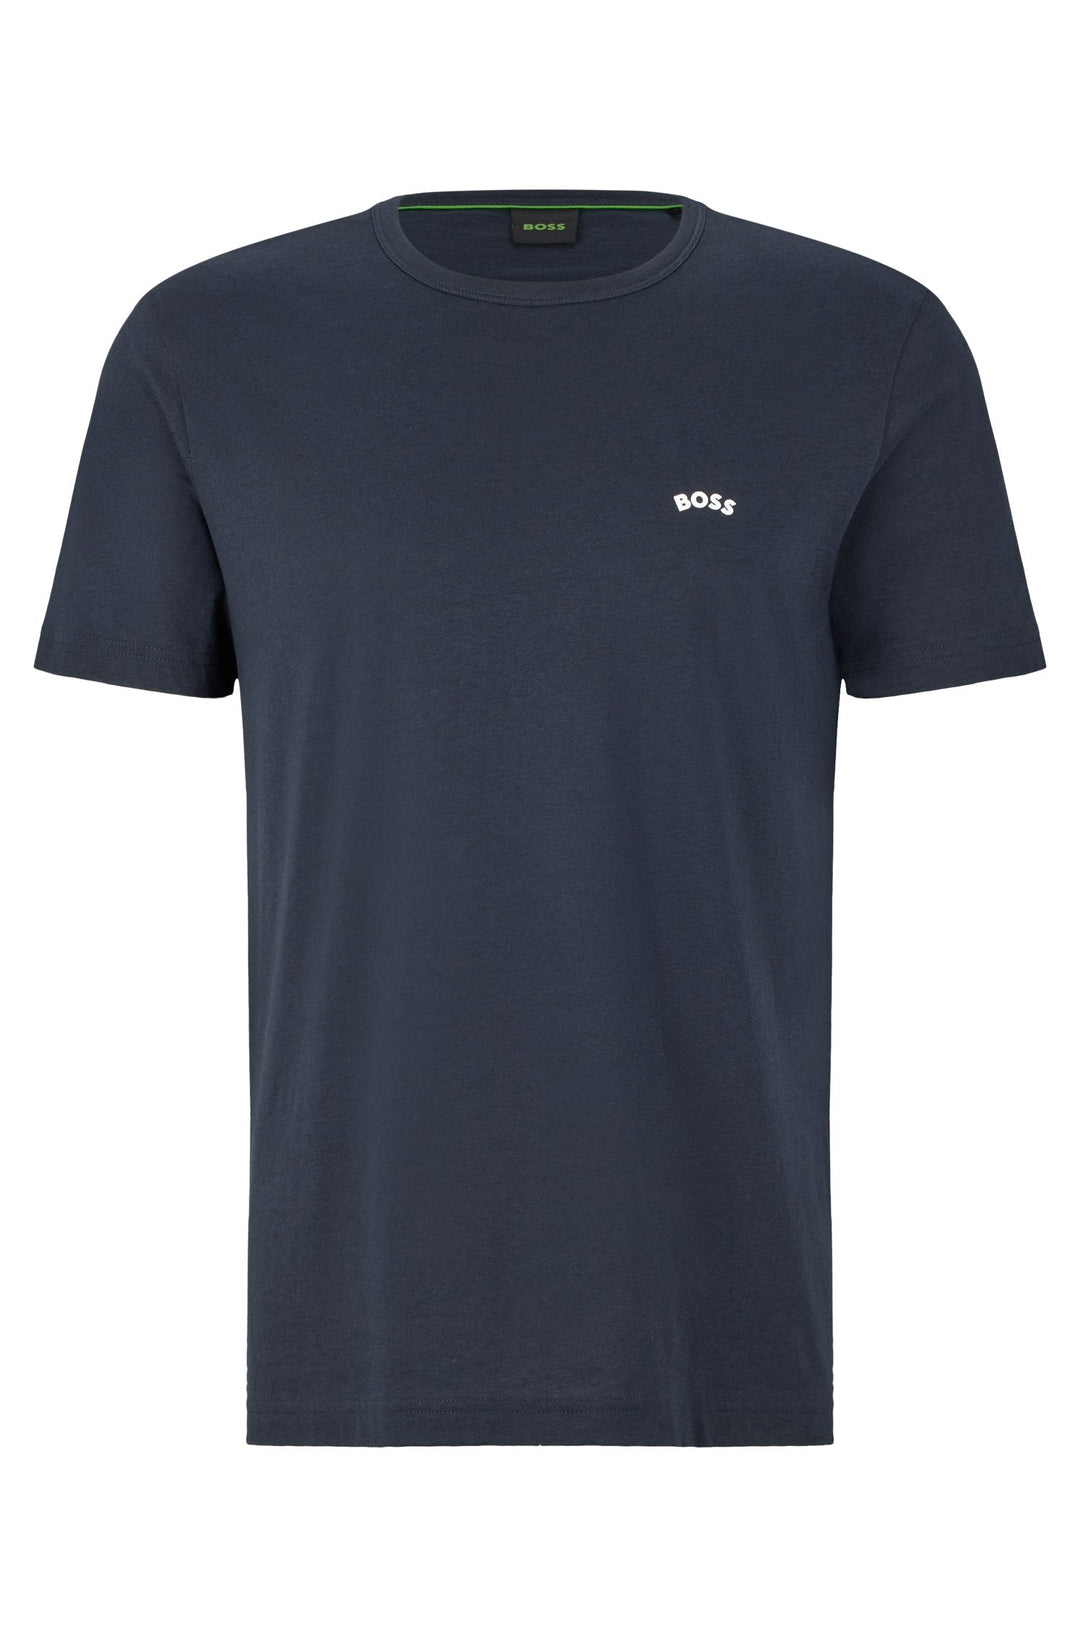 Hugo Boss Curved Logo T-Shirt Navy - Urban Menswear